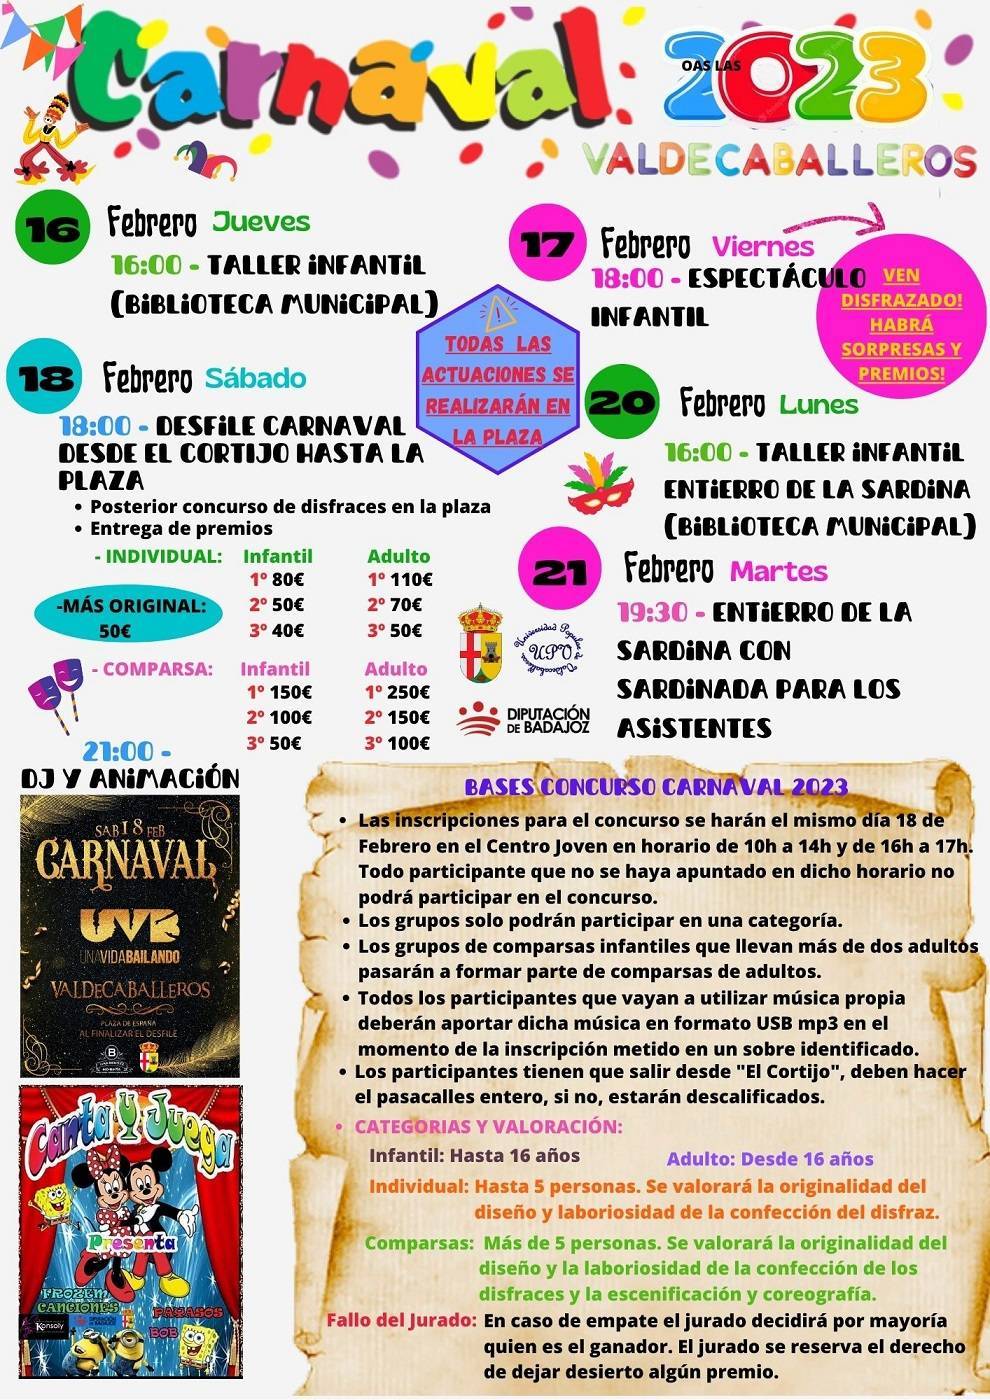 Carnaval (2023) - Valdecaballeros (Badajoz)